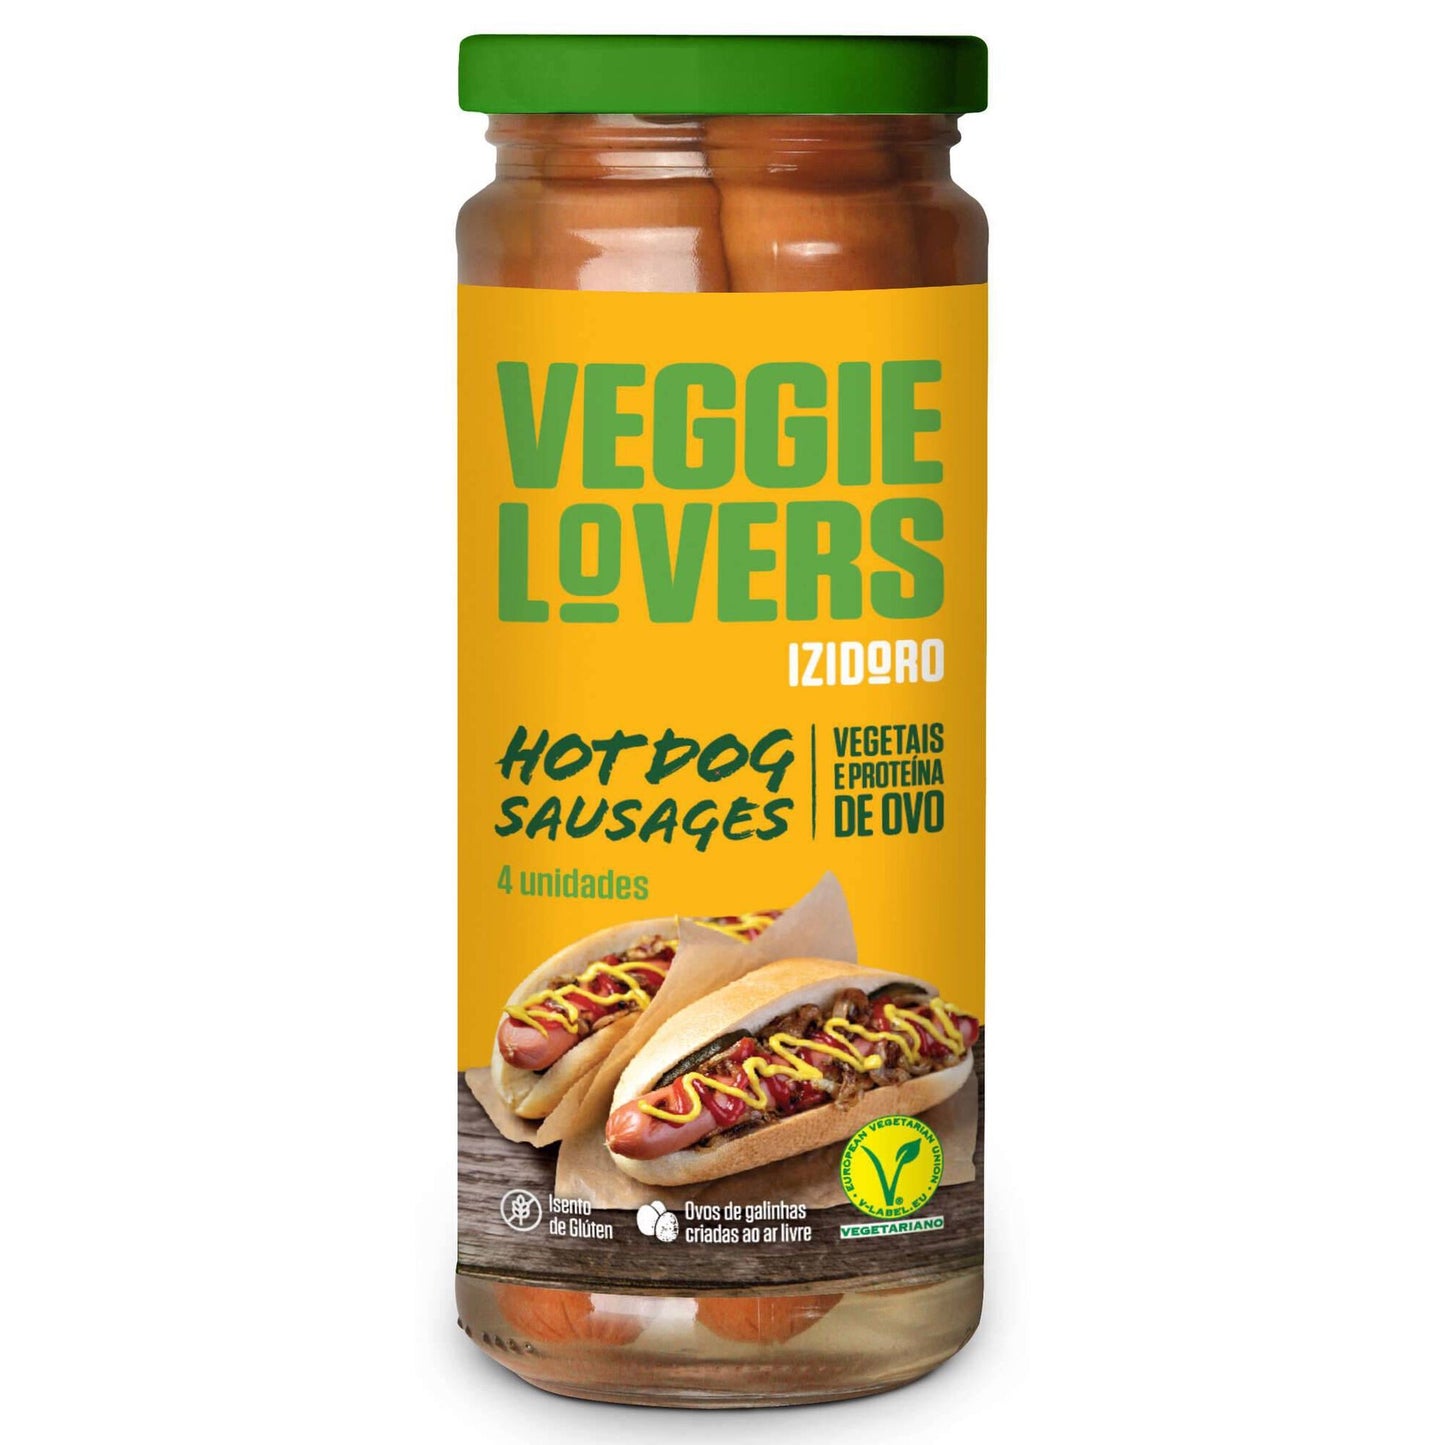 Salchichas Hot Dog Vegetarianas 4 unidades Izidoro